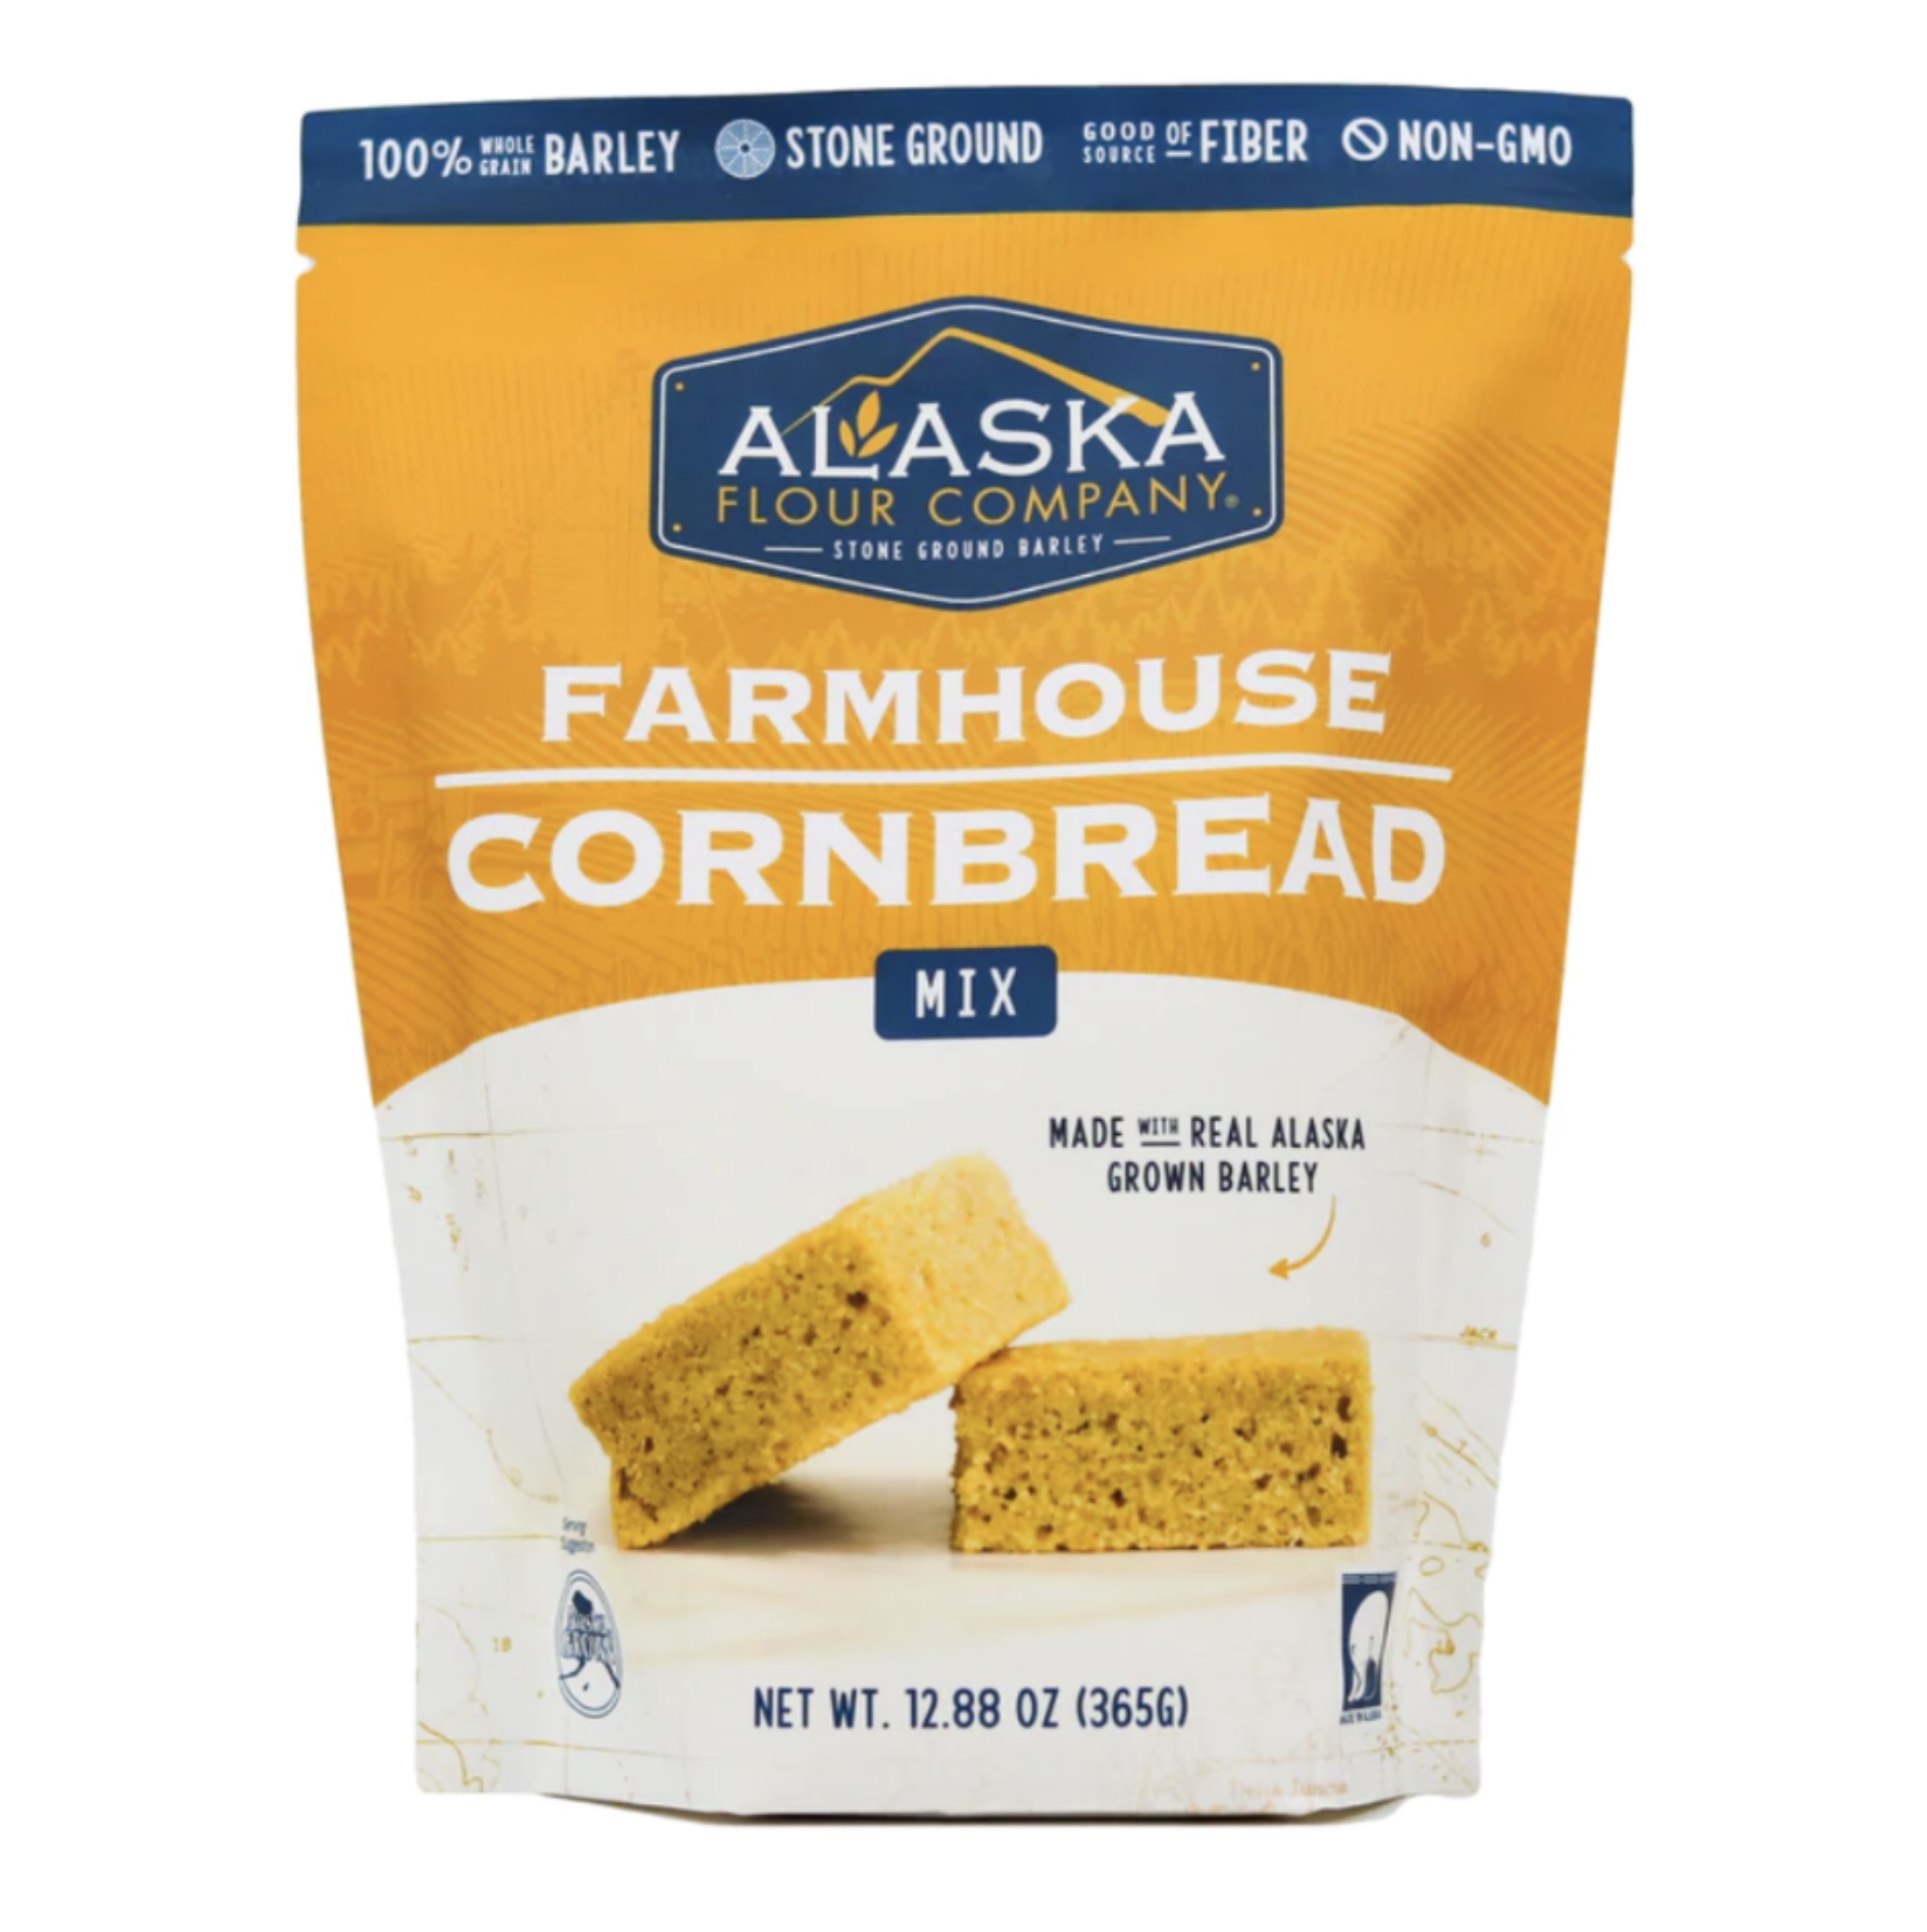 Cornbread Mix Farmhouse 6/5lb AK Flour Company - Sold by EA